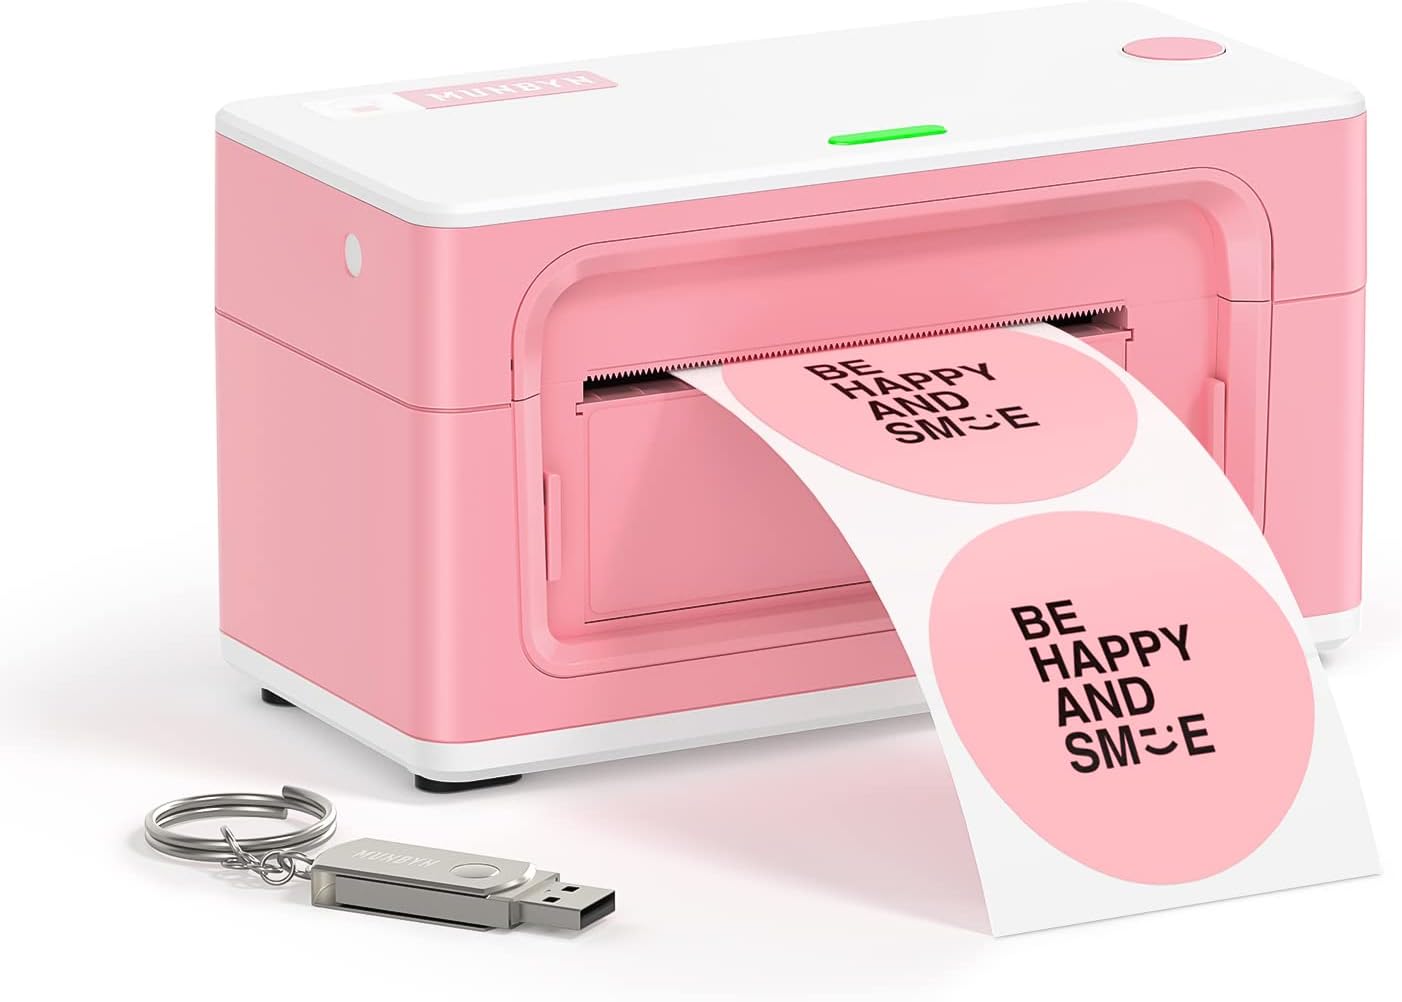 MUNBYN Pink Shipping Label Printer, P941 [Upgraded [...]